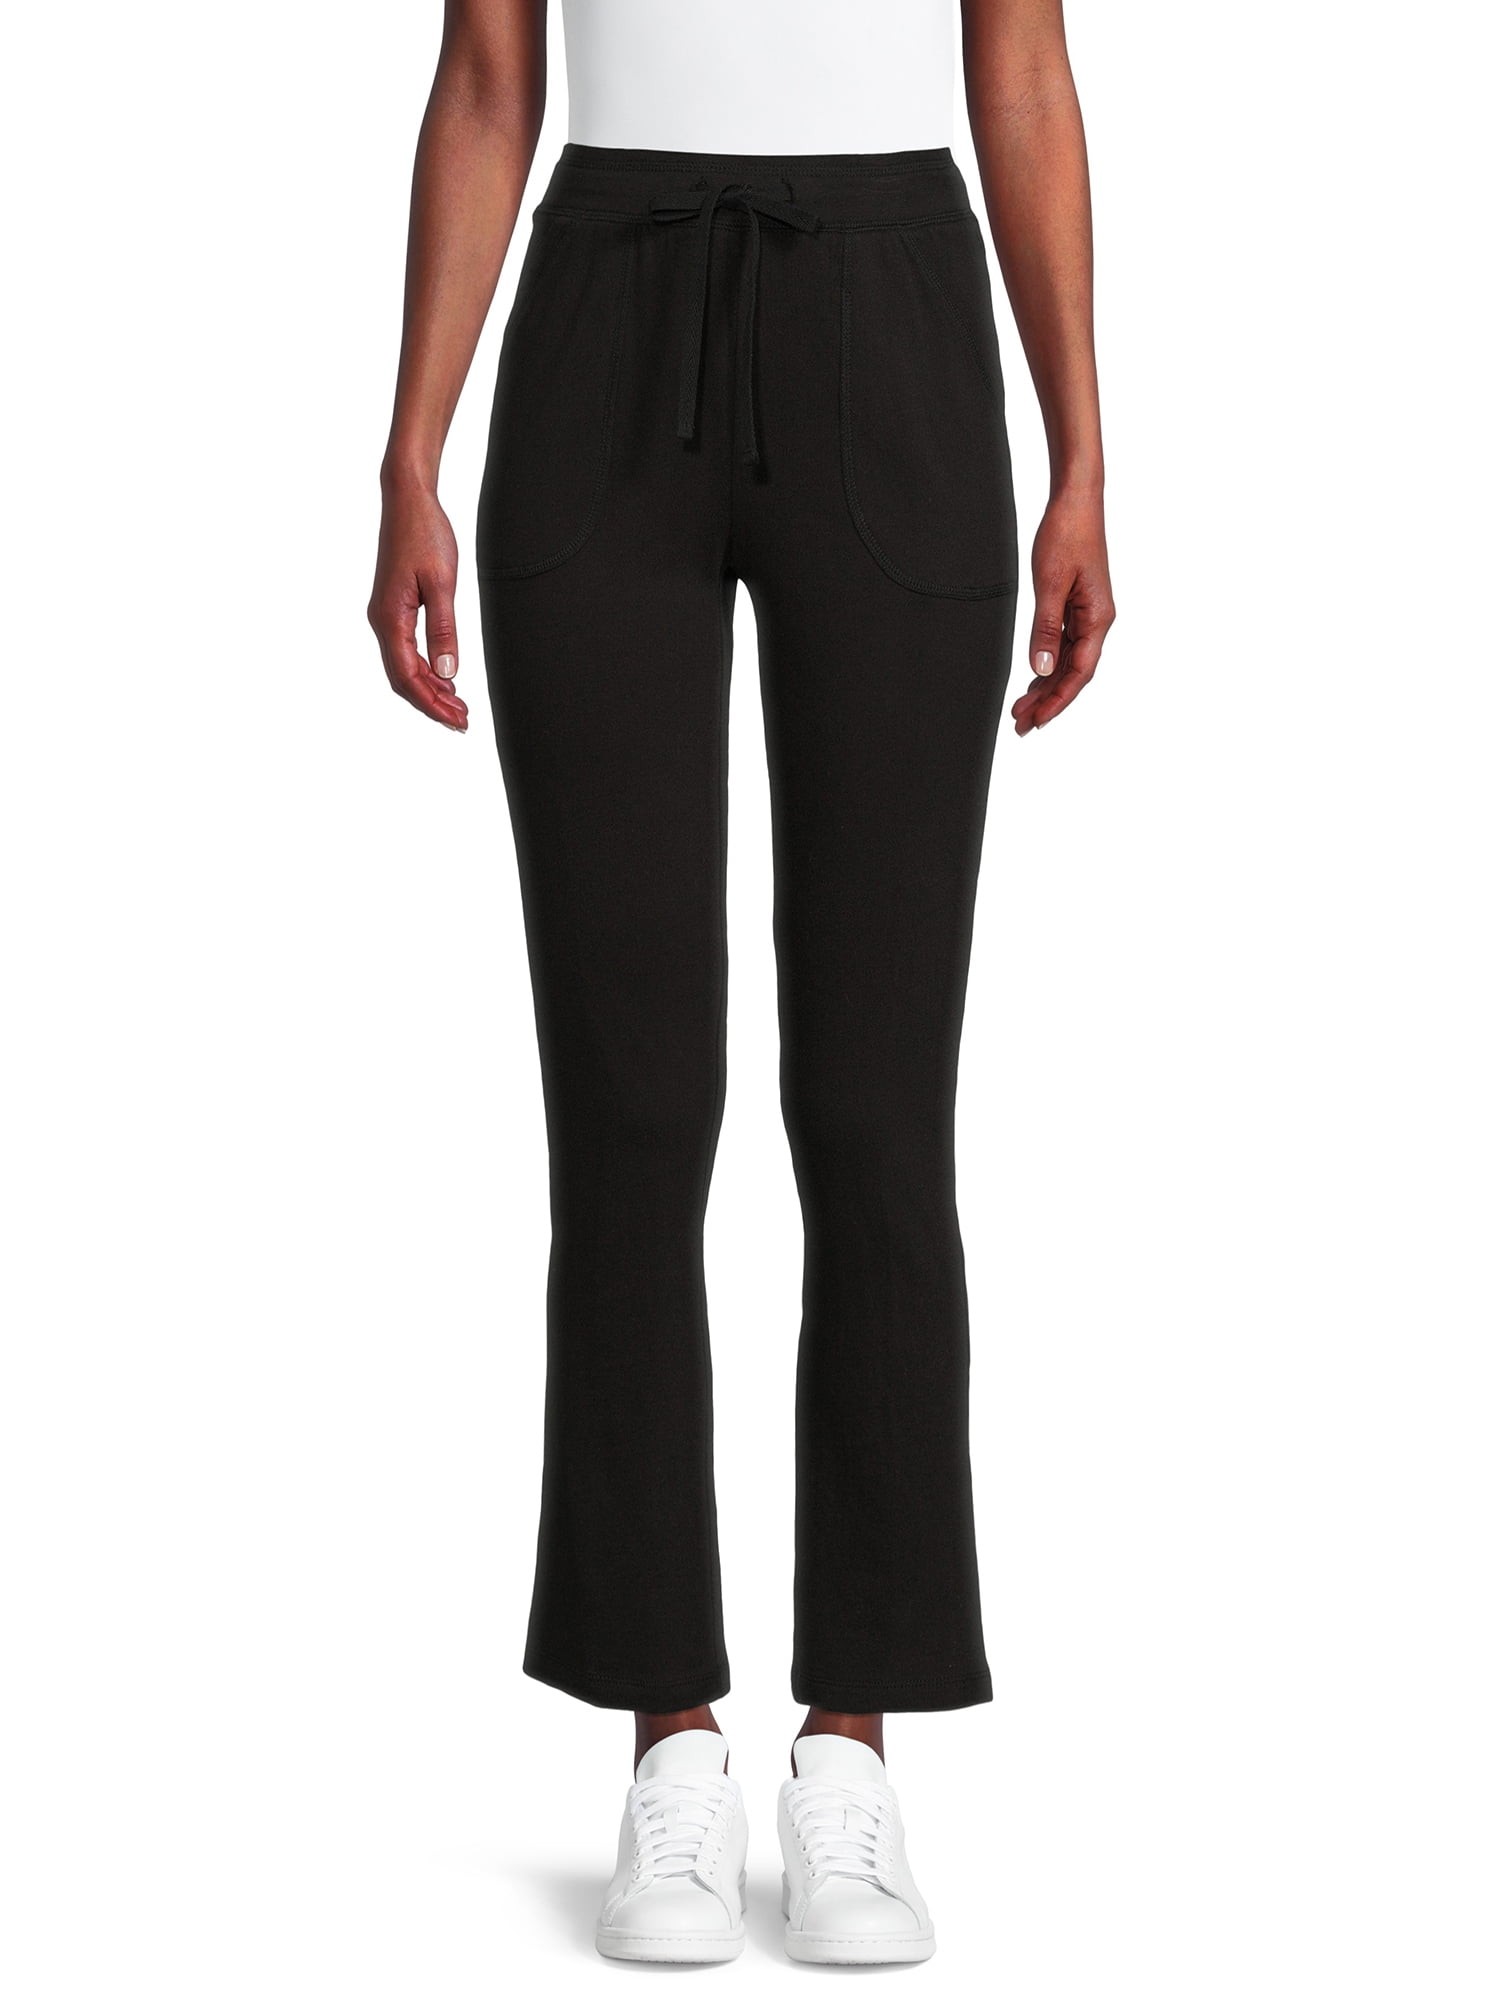 Mejores ofertas e historial de precios de RealSize Women's French Terry  Cloth Pants with Pockets en